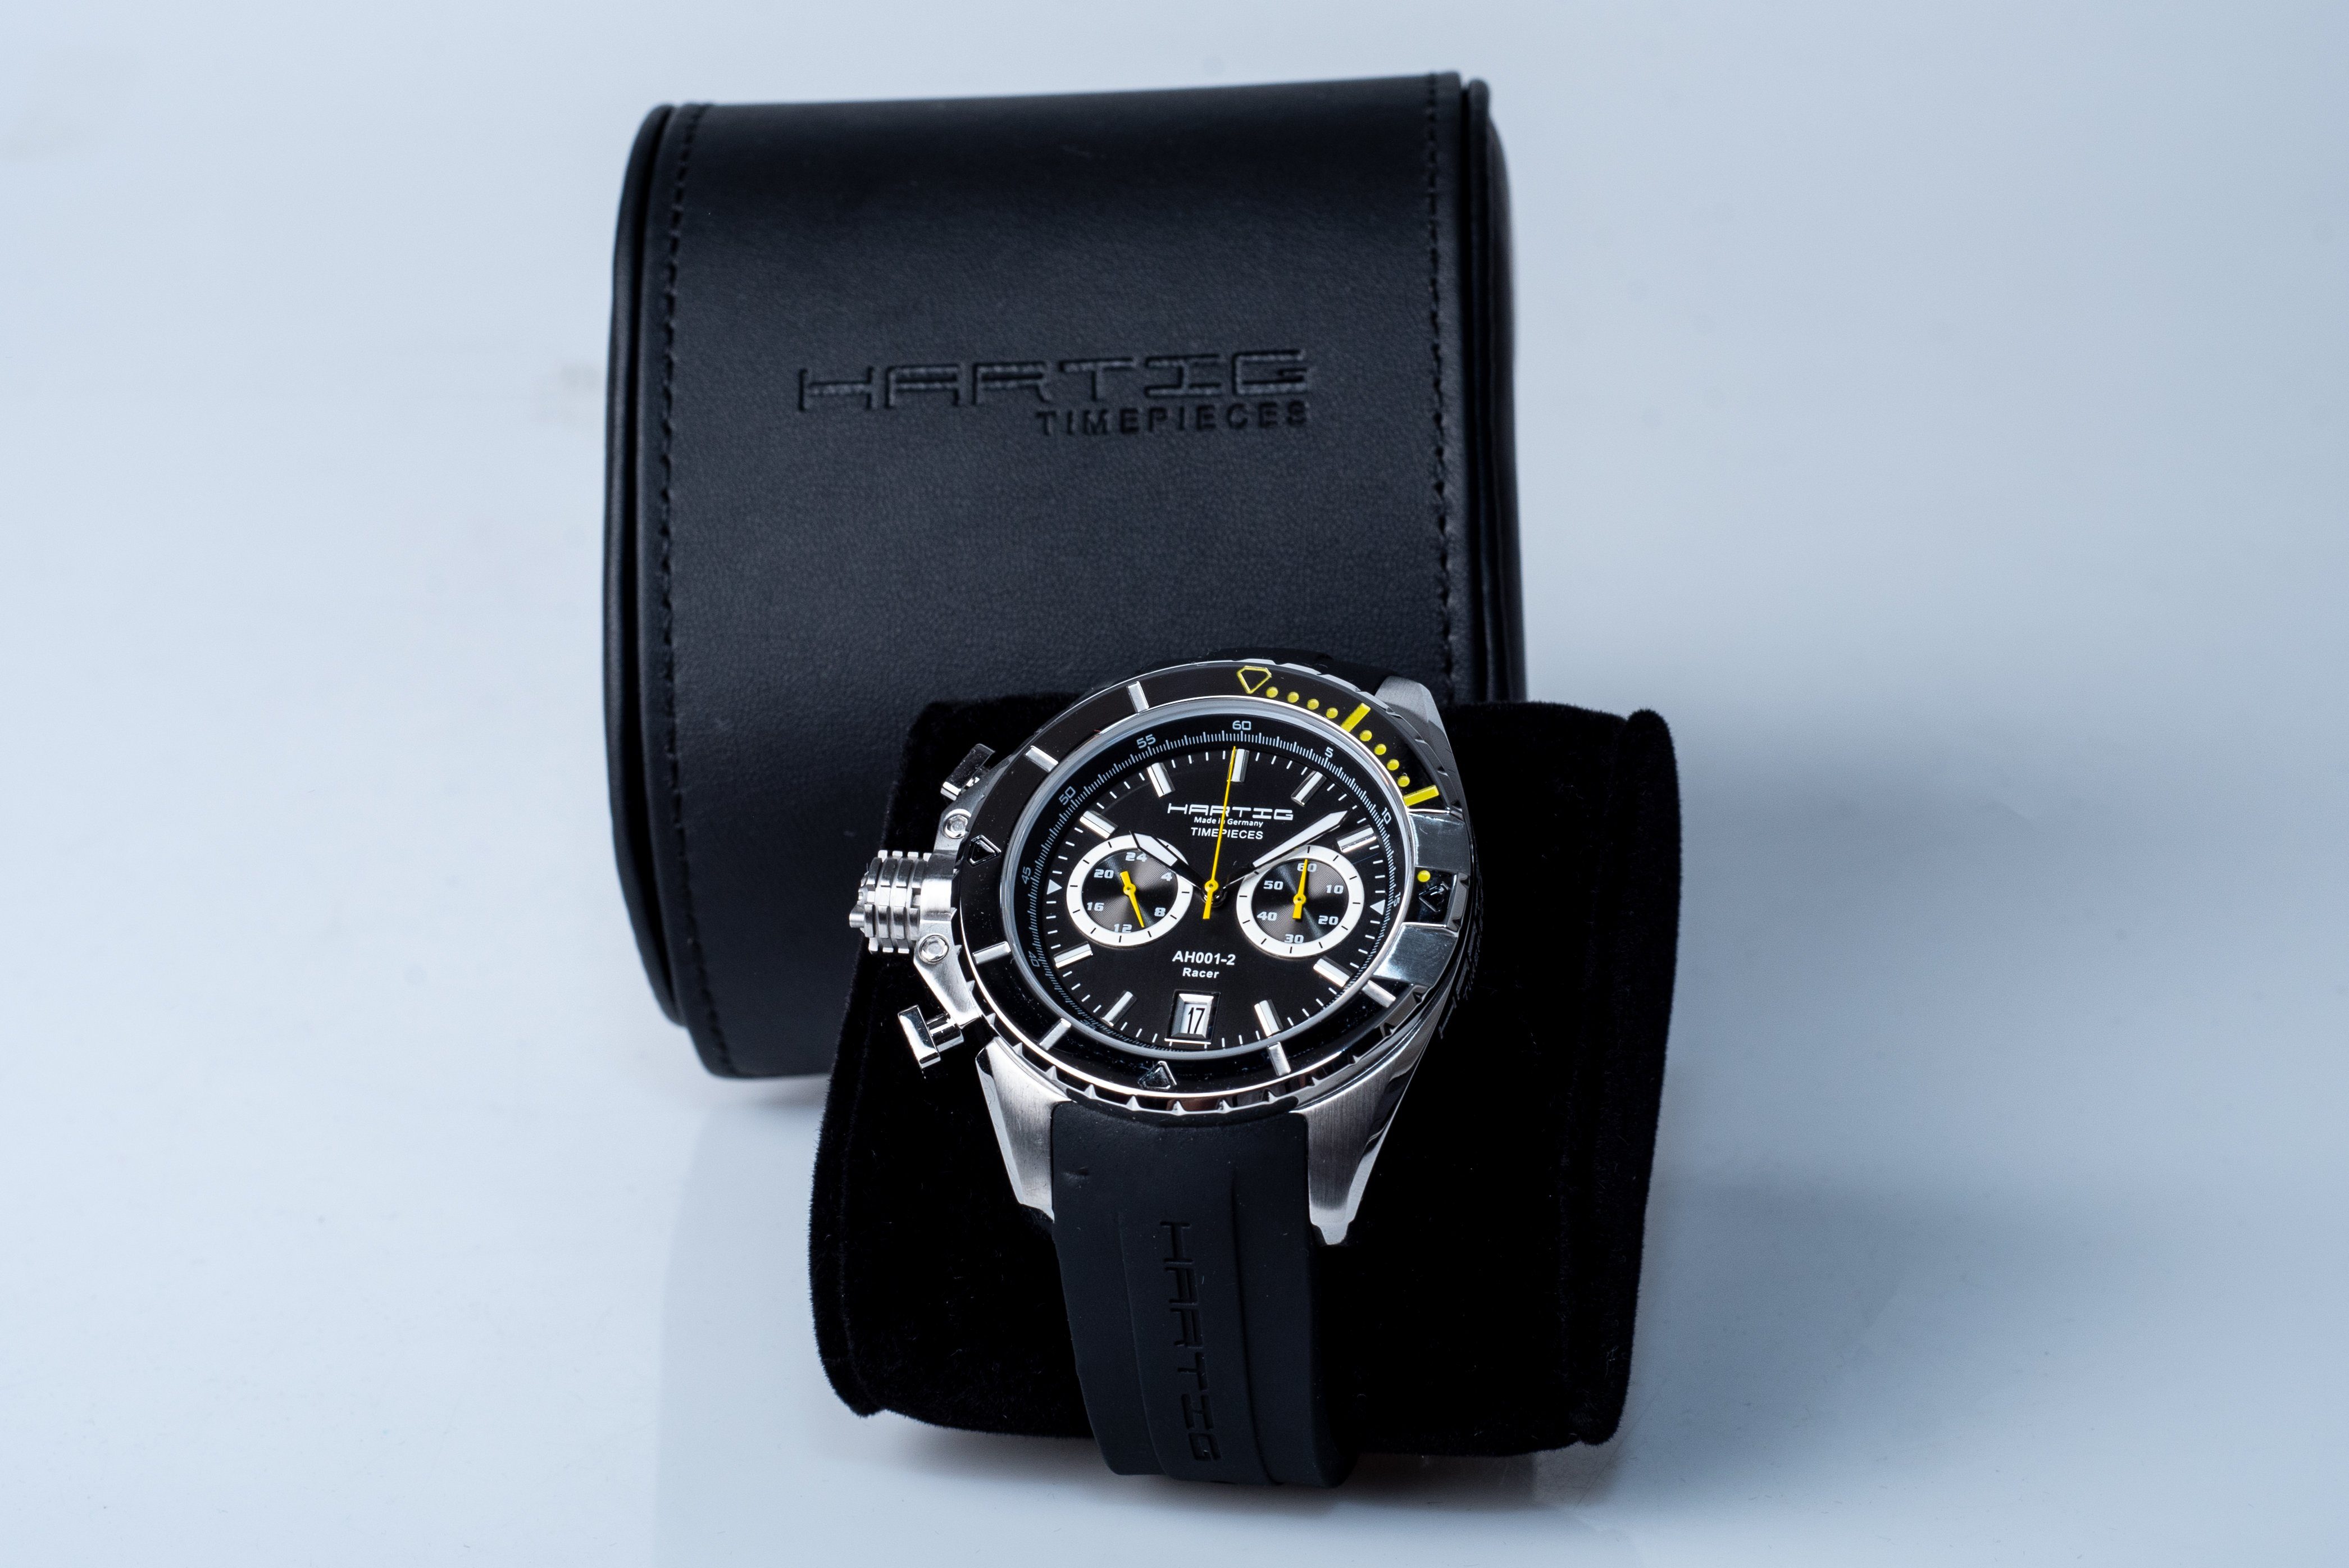 Hartig Uhr yellow AH001-2 Mechanische Timepieces